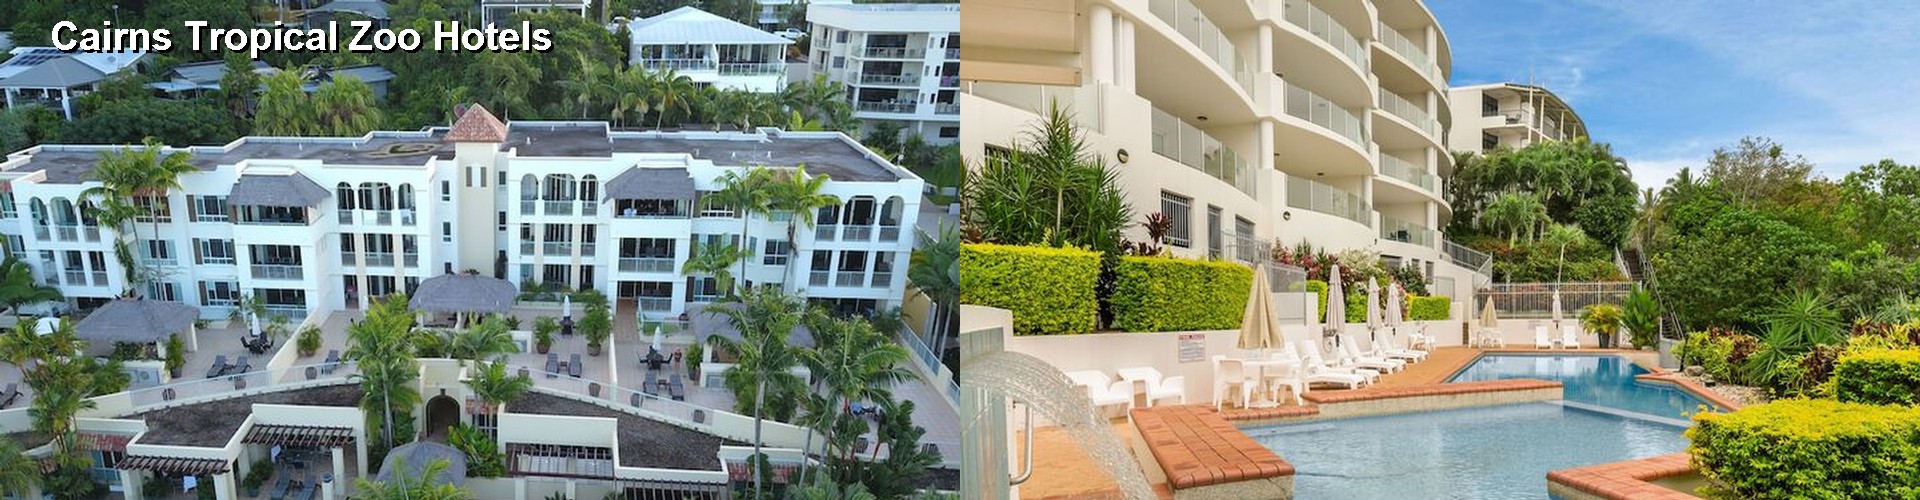 5 Best Hotels near Cairns Tropical Zoo